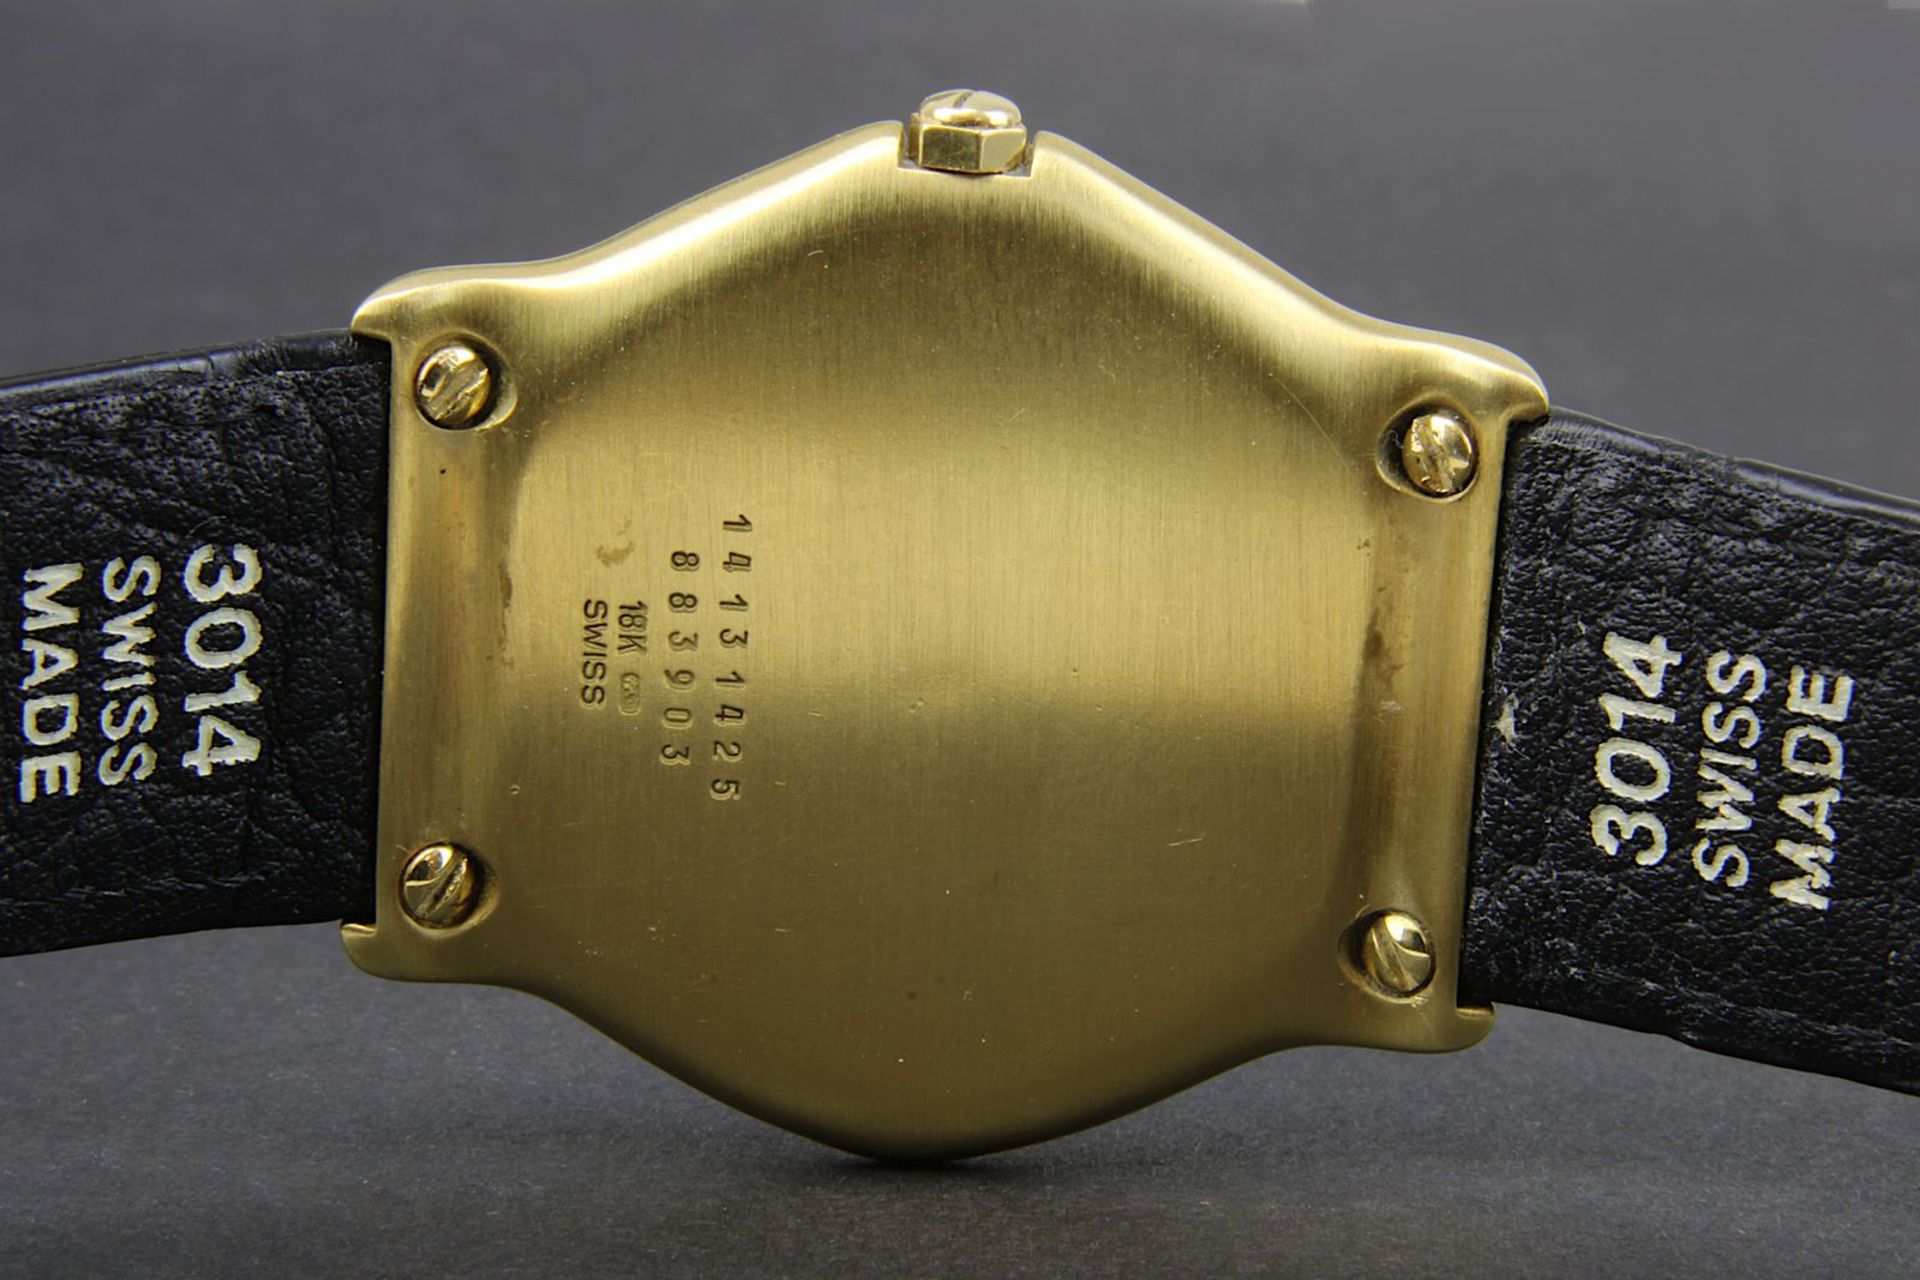 Ebel-Armbanduhr, Modell Classic, 18-karätiges Gelbgold, mit Original-Ebel-Quarzwerk, rückseitig - Bild 2 aus 2